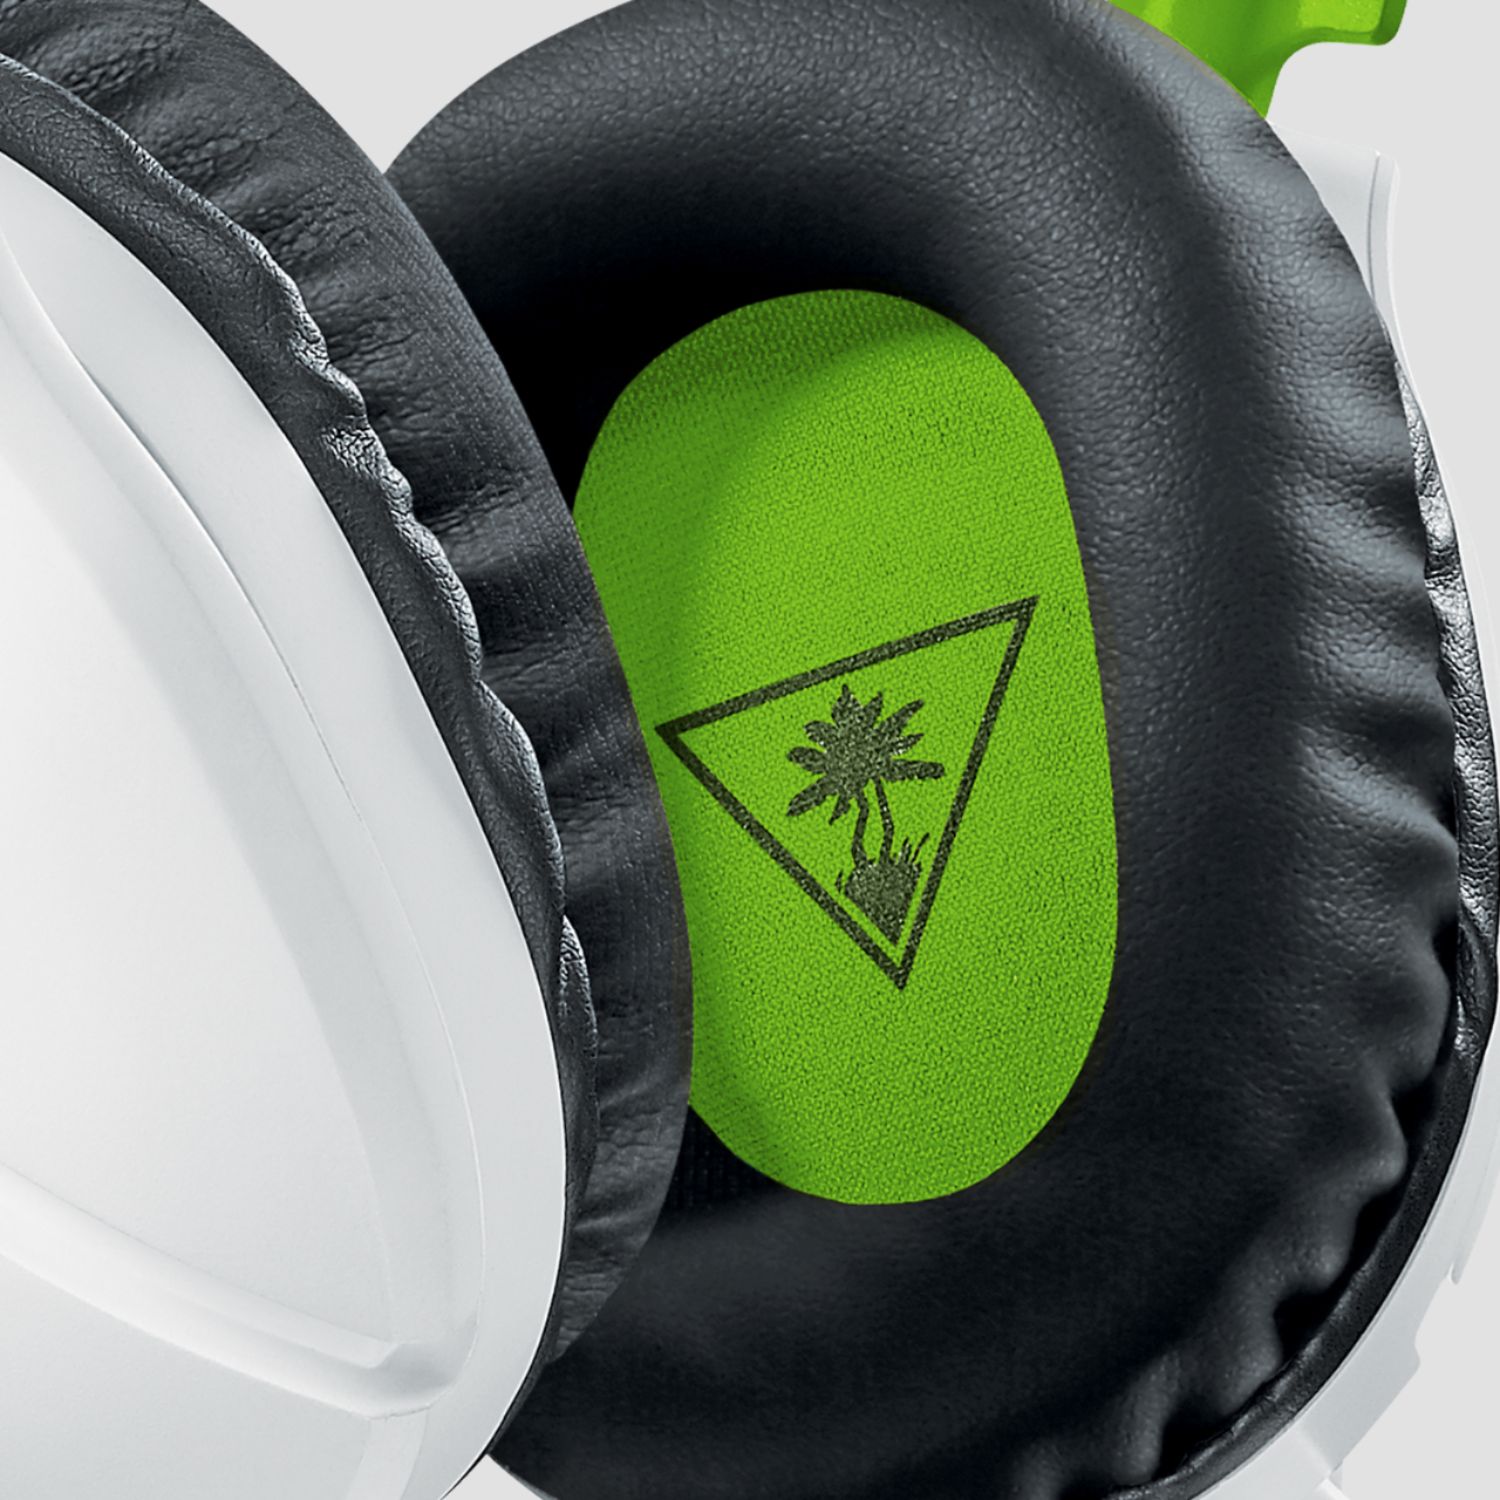 Turtle Beach Recon 70 Xbox Gaming Headset for Xbox Series X, Xbox